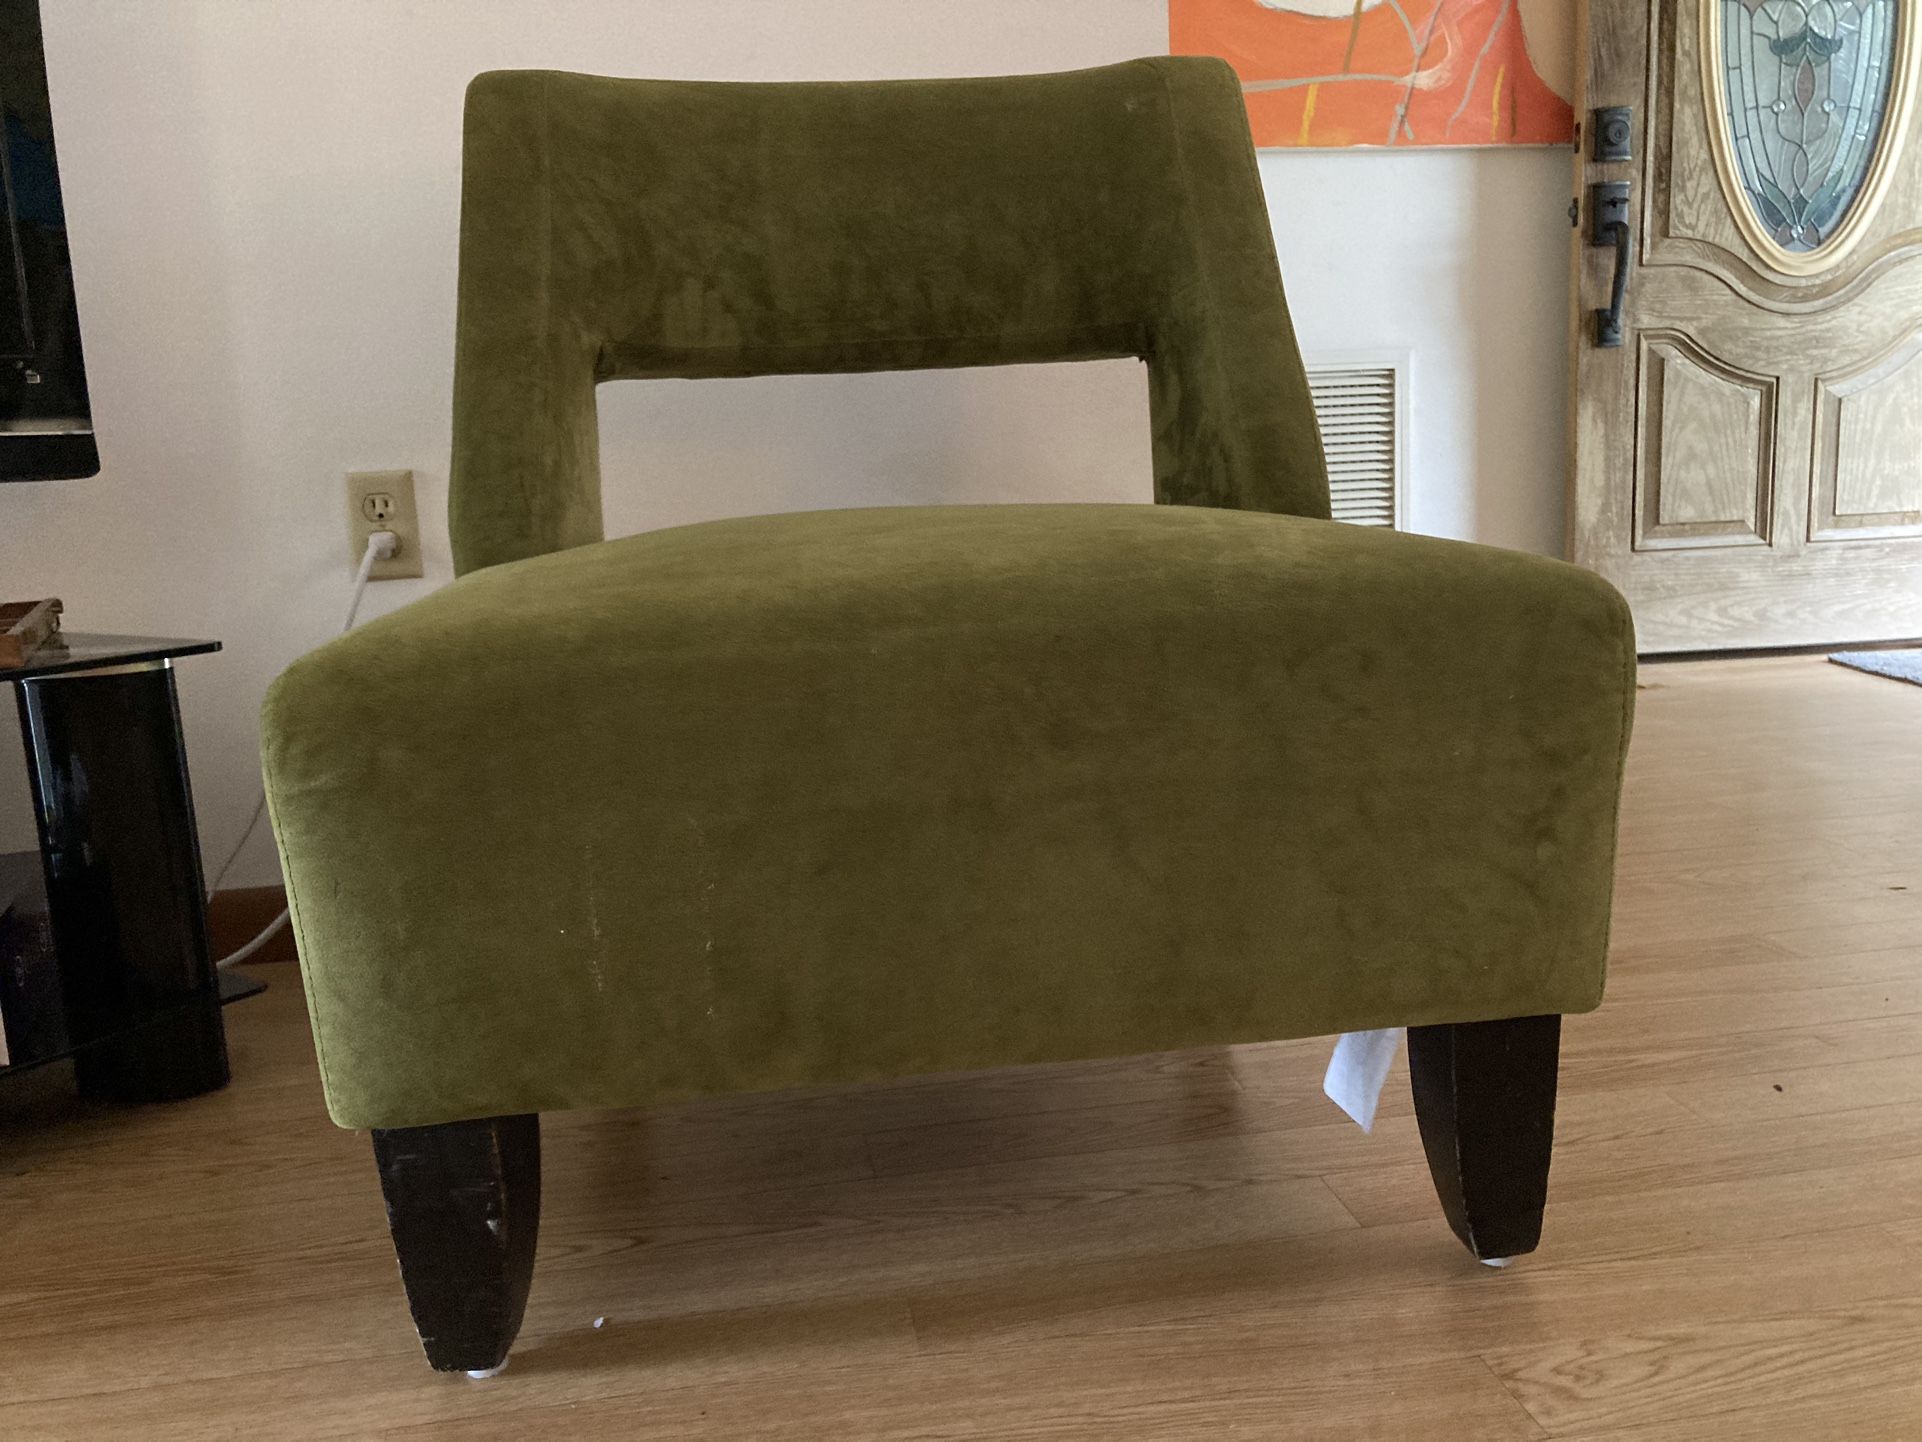 Post Mod Vintage Chair